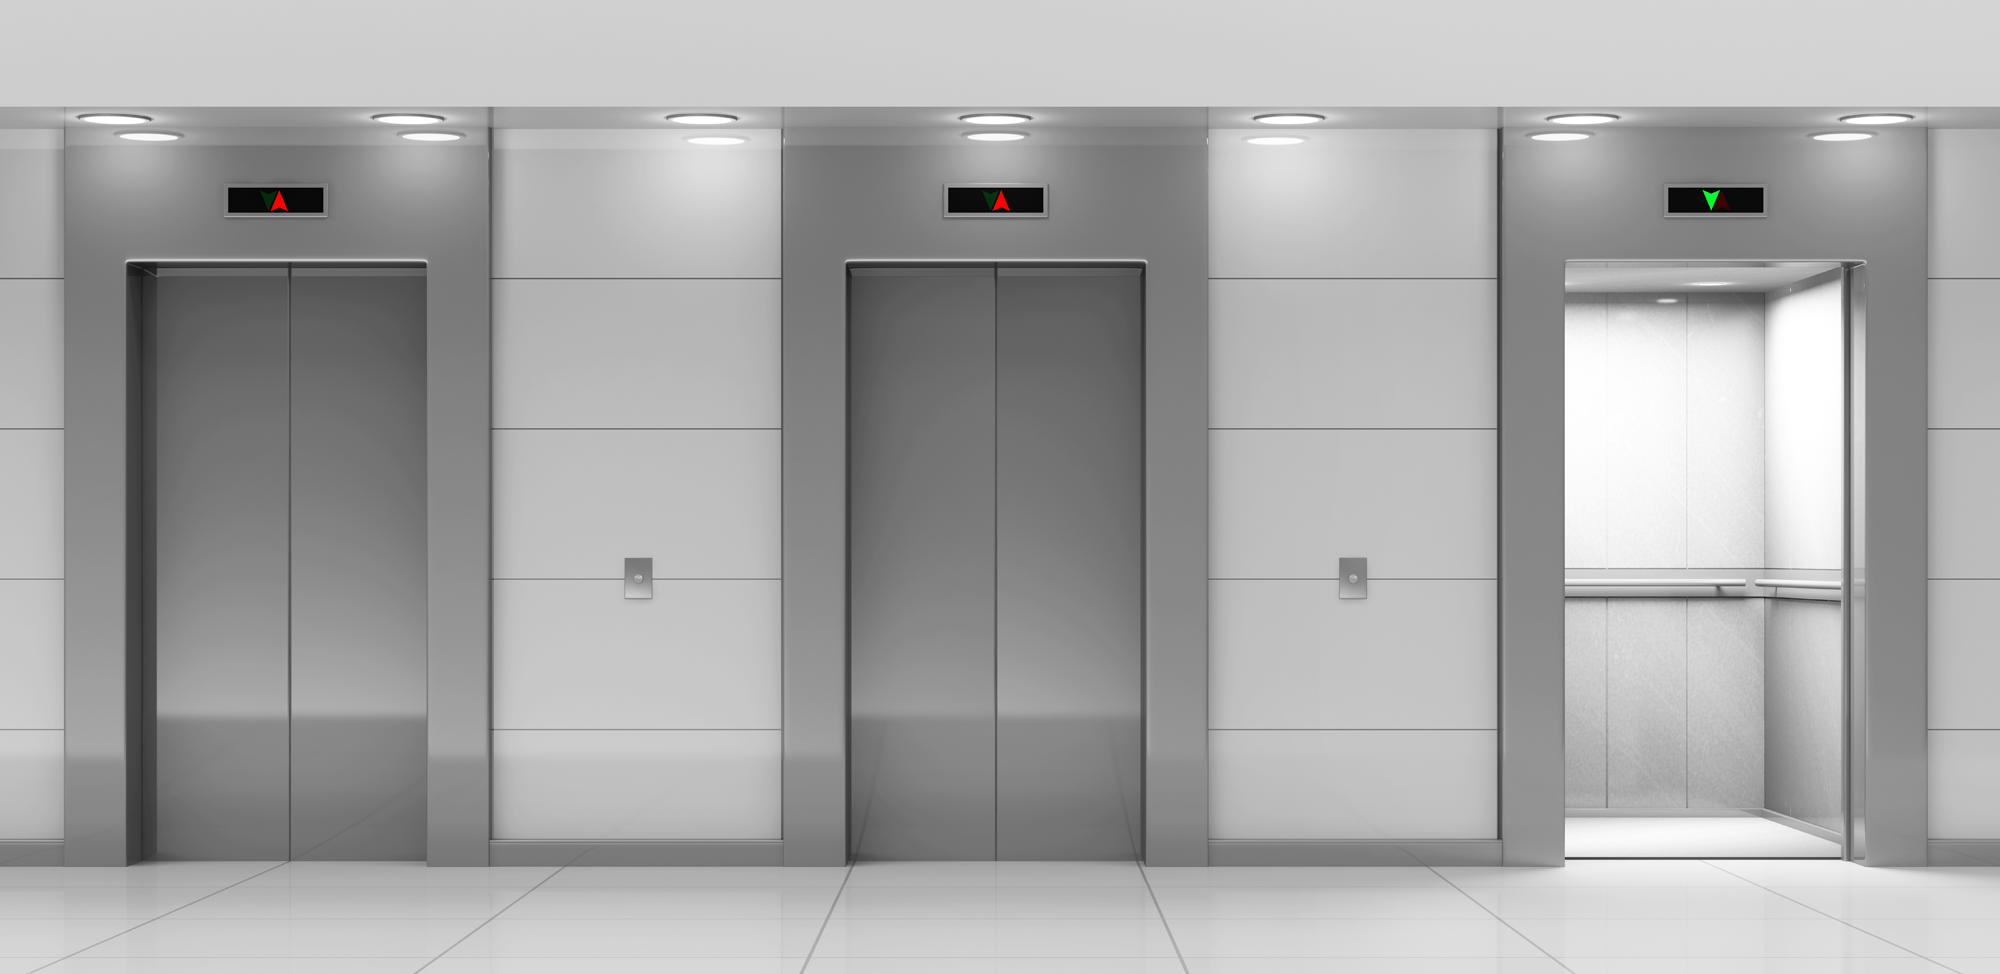 Лифты и эскалаторы